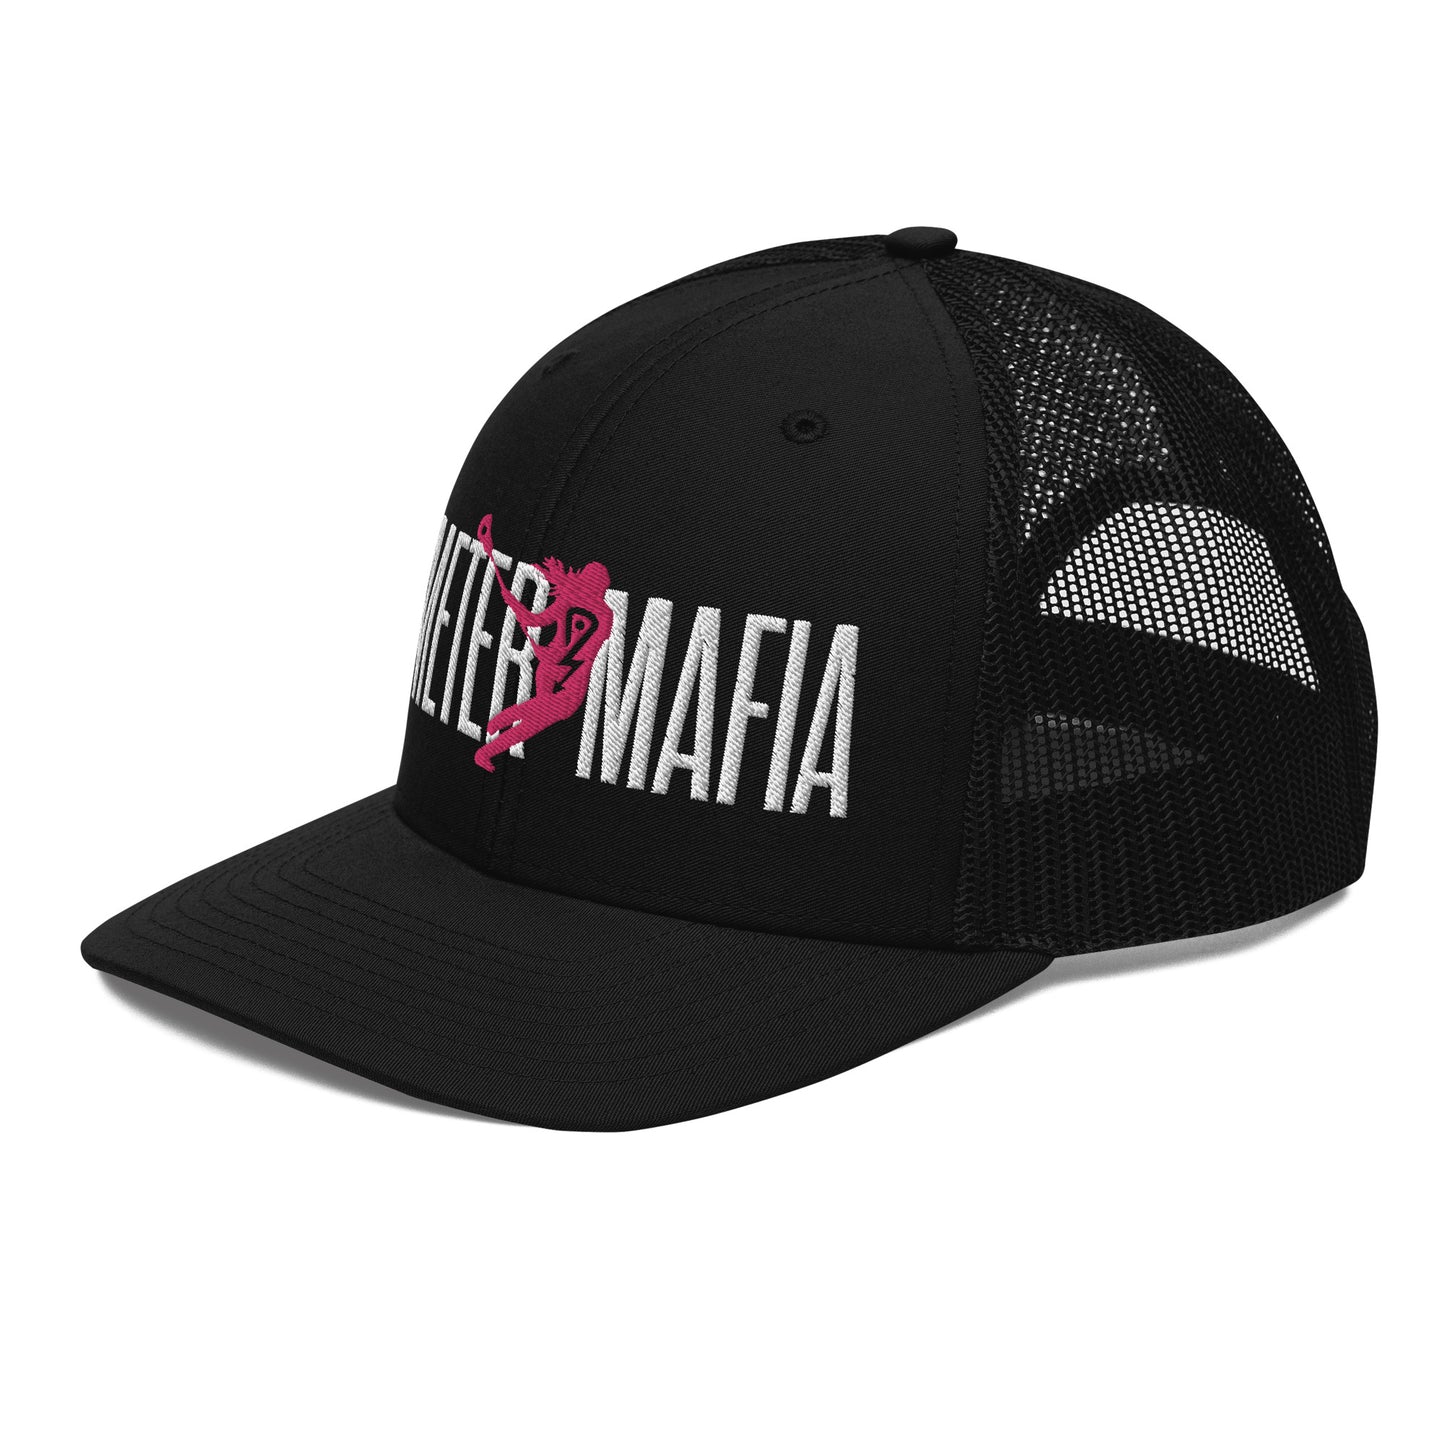 8 Meter Mafia Black Trucker Cap